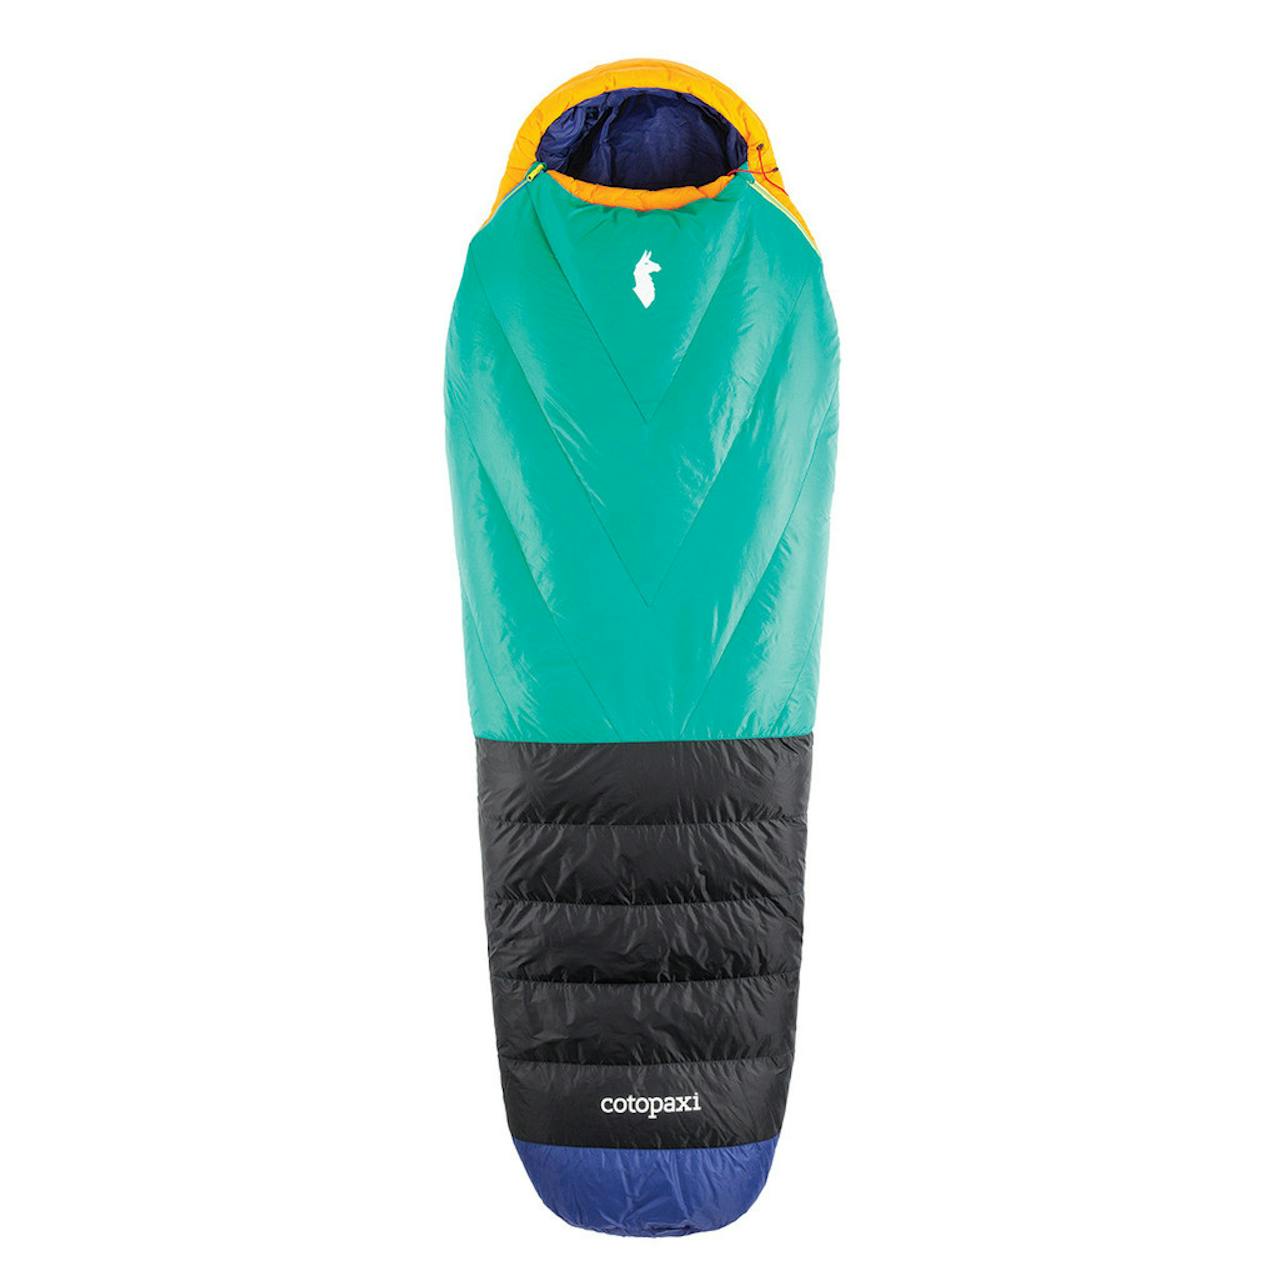 Cotopaxi Sueno Sleeping Bag - 15°